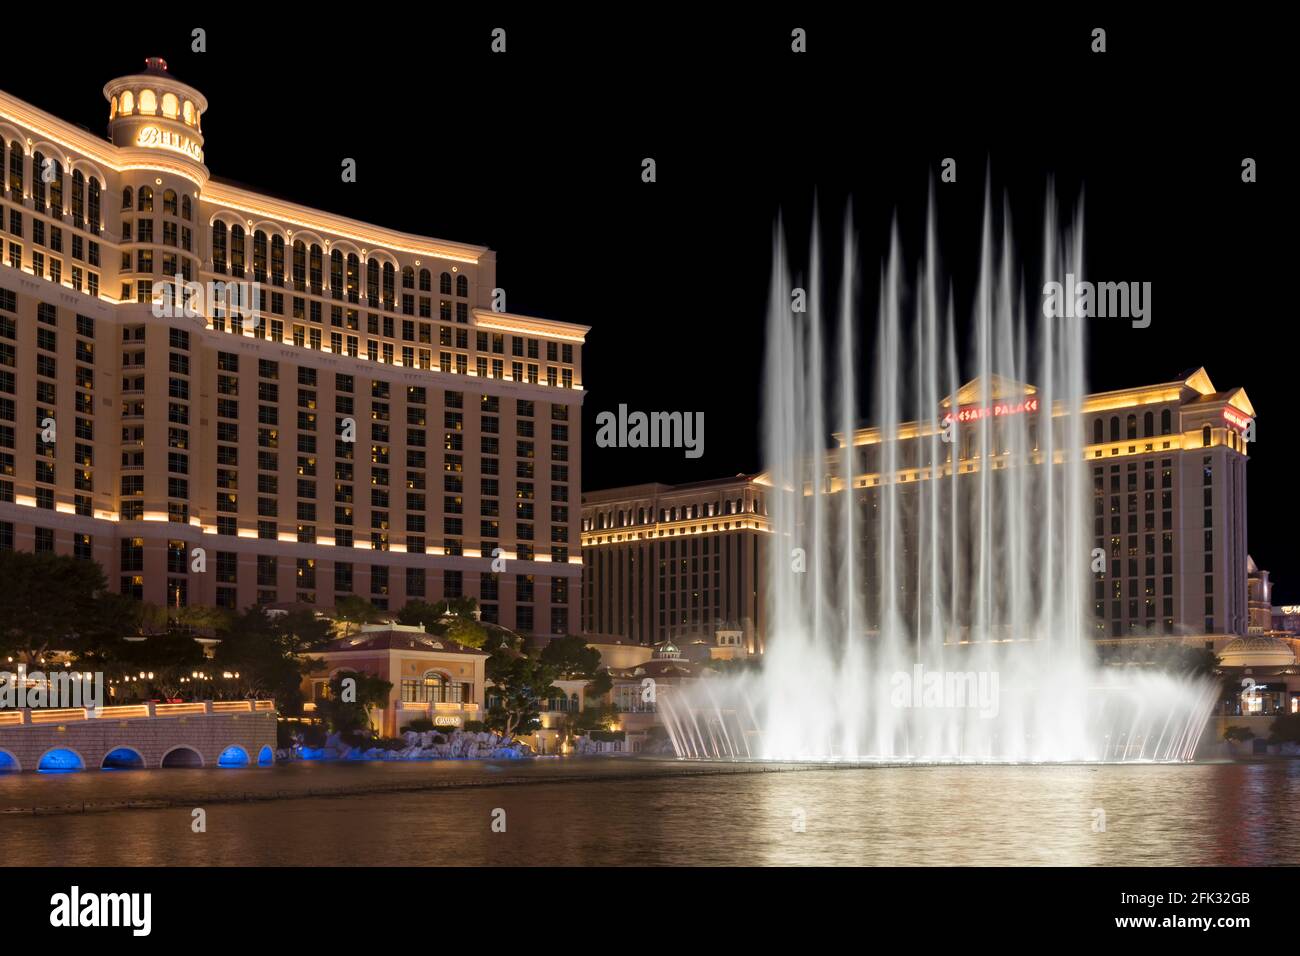 Fontane di Bellagio, Las Vegas, NV Foto Stock